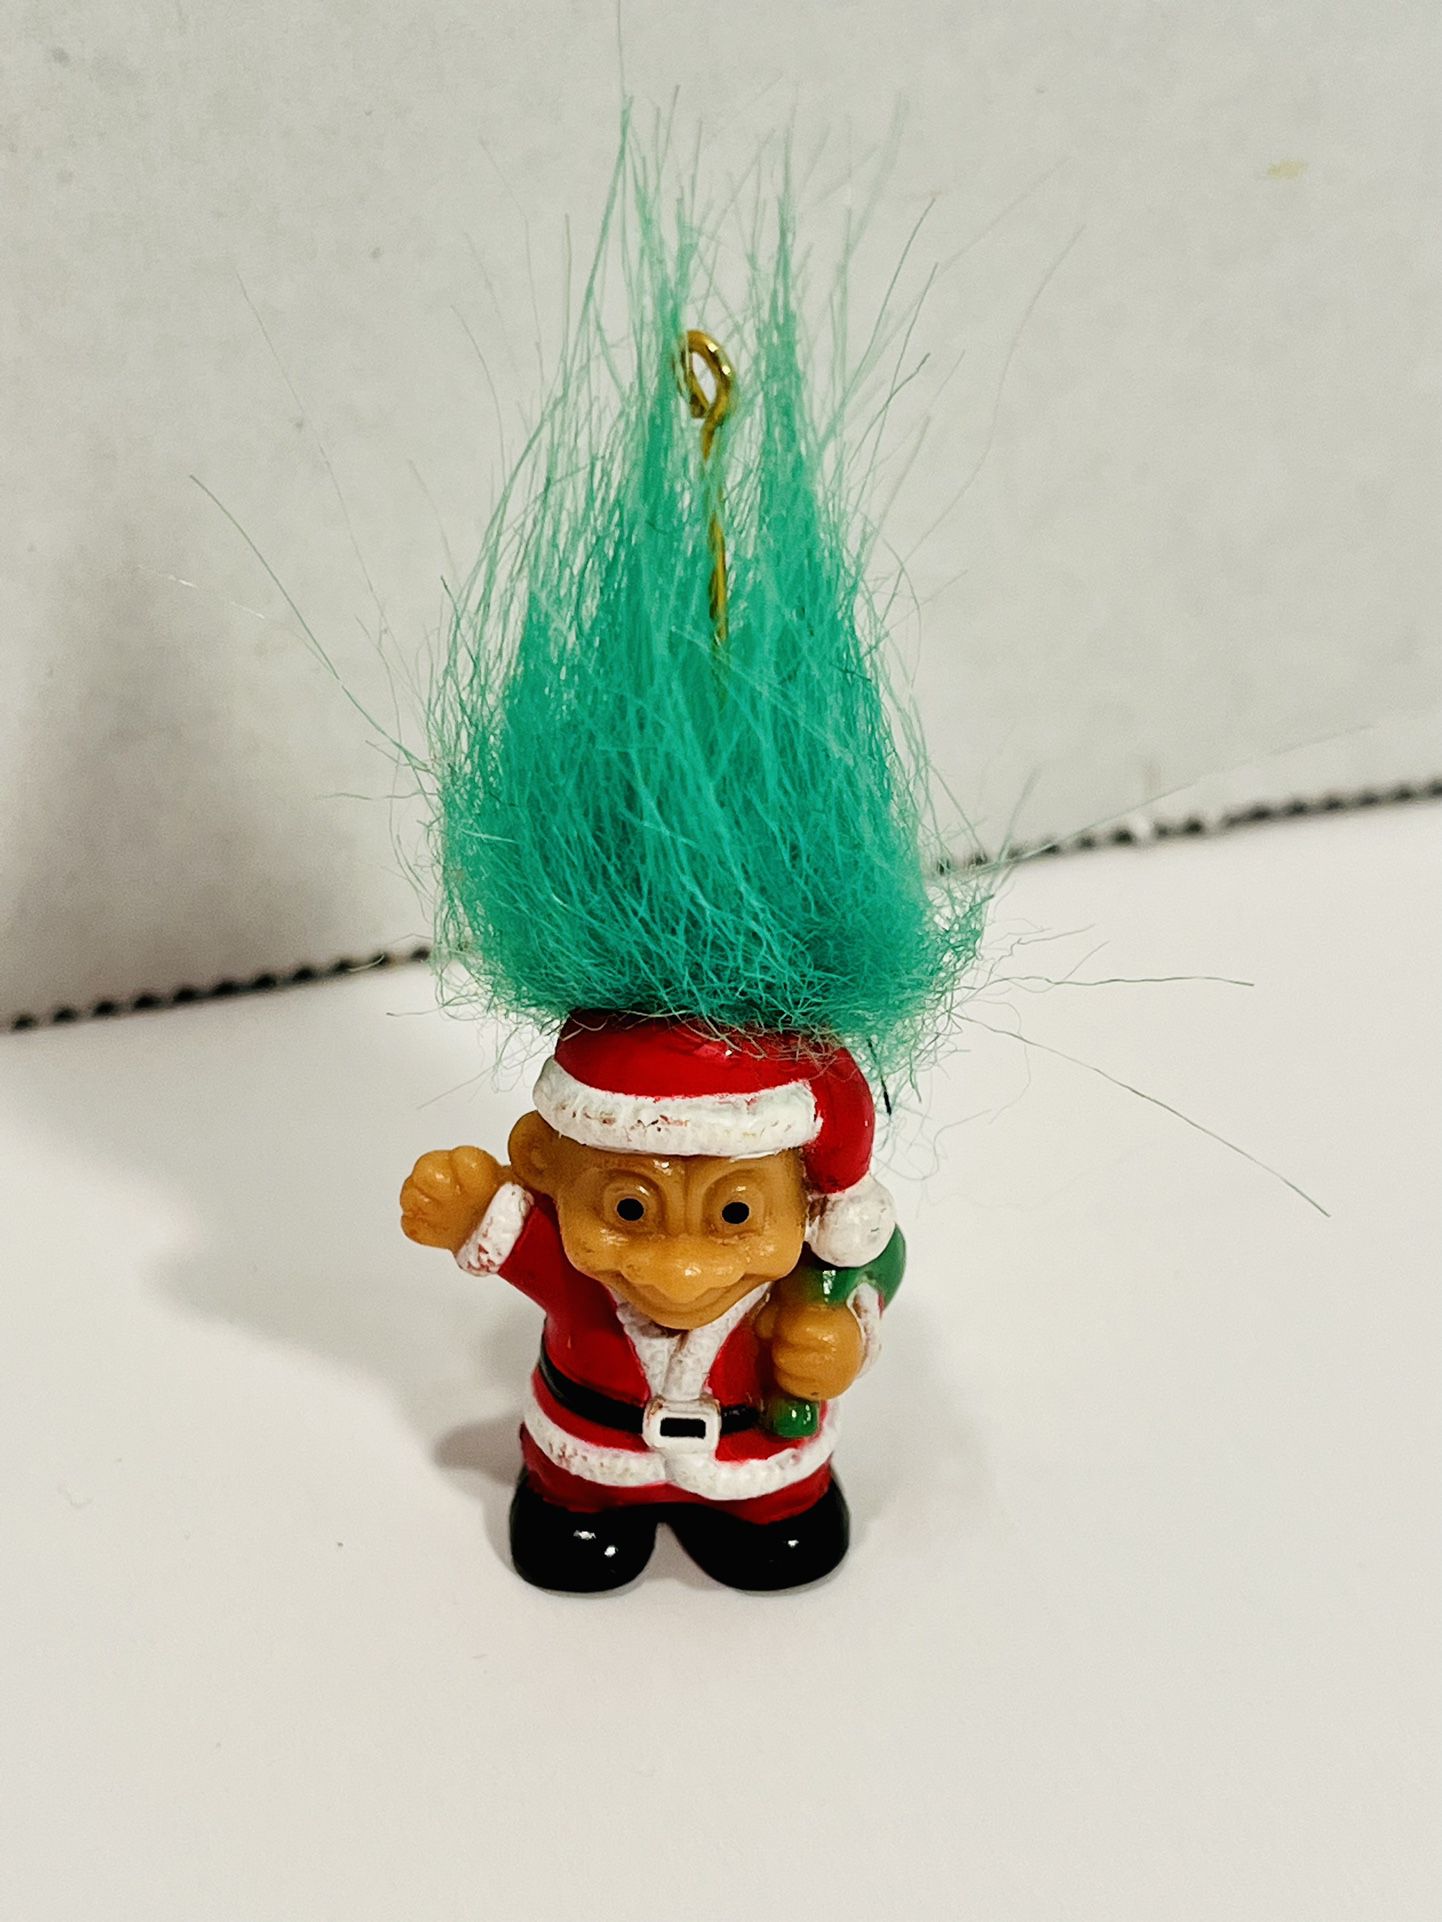 VINTAGE RUSS CHRISTMAS TROLL DOLL GREEN HAIR SANTA HAT ORNAMENT Rare!